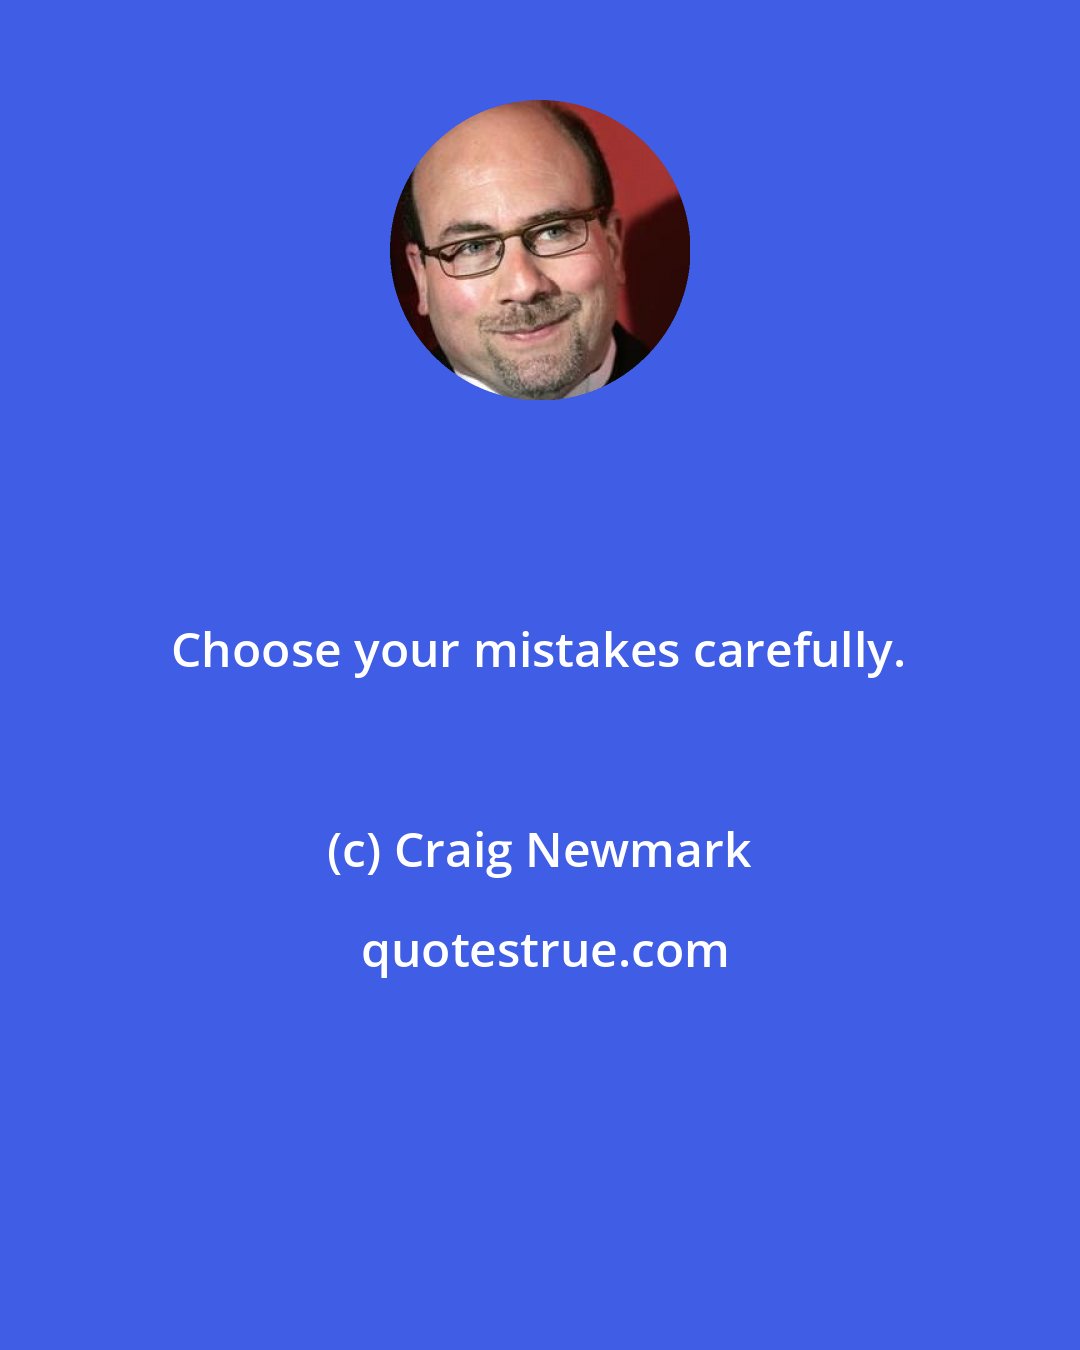 Craig Newmark: Choose your mistakes carefully.